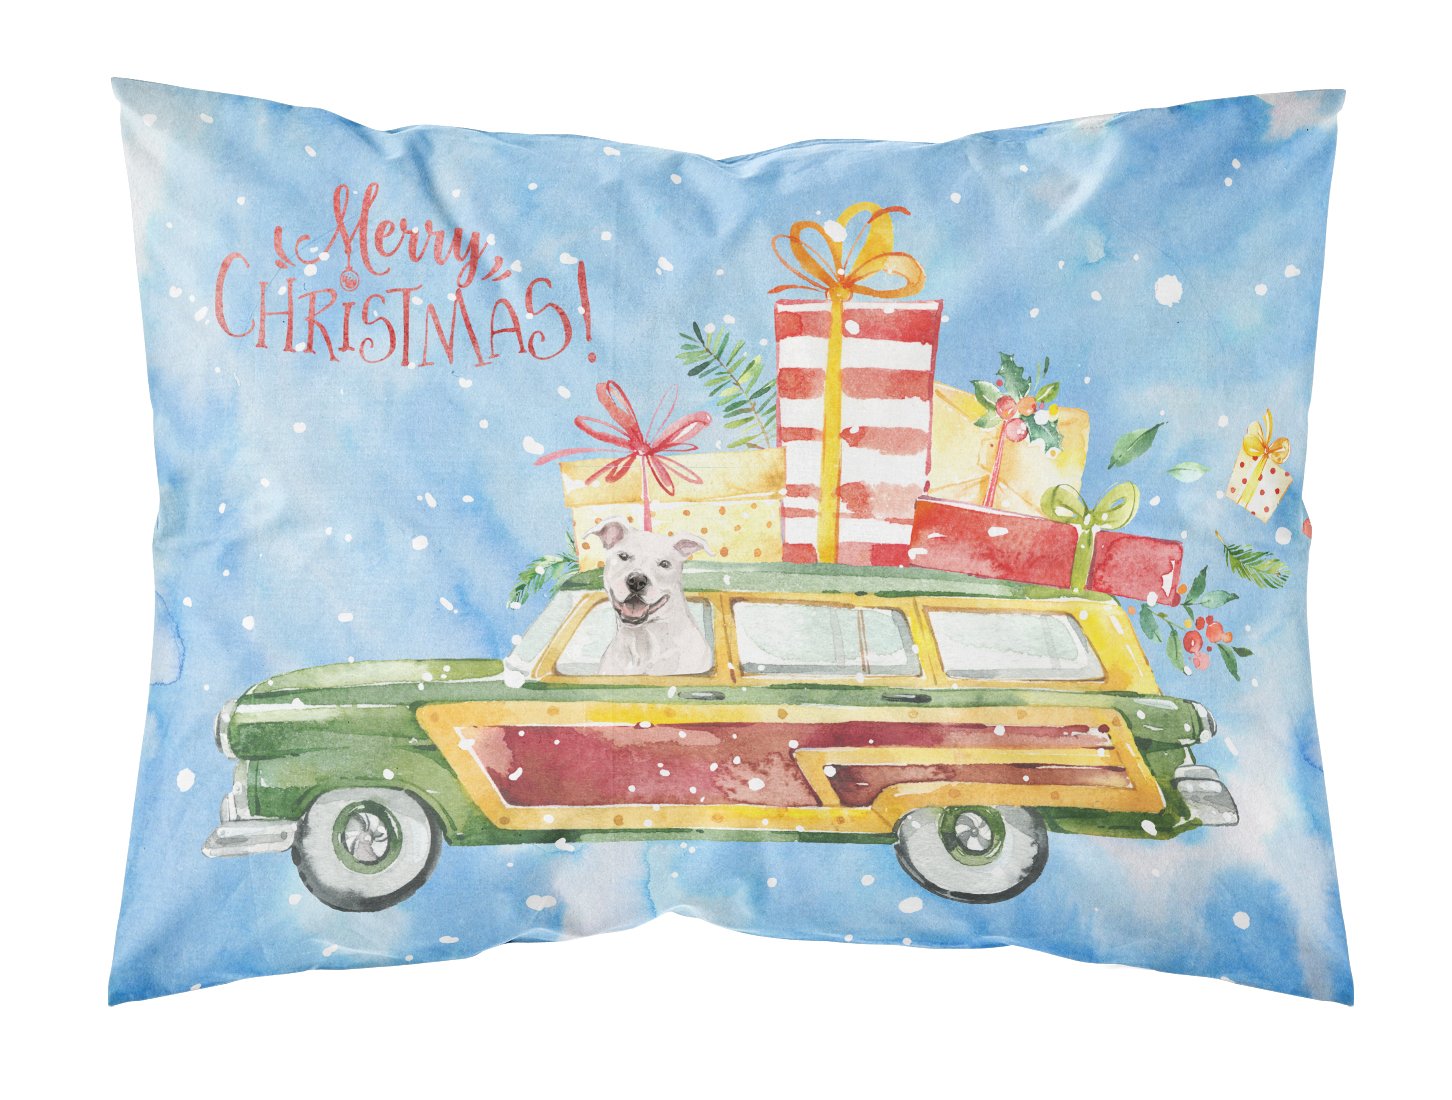 Merry Christmas White Staffordshire Bull Terrier Fabric Standard Pillowcase CK2433PILLOWCASE by Caroline's Treasures